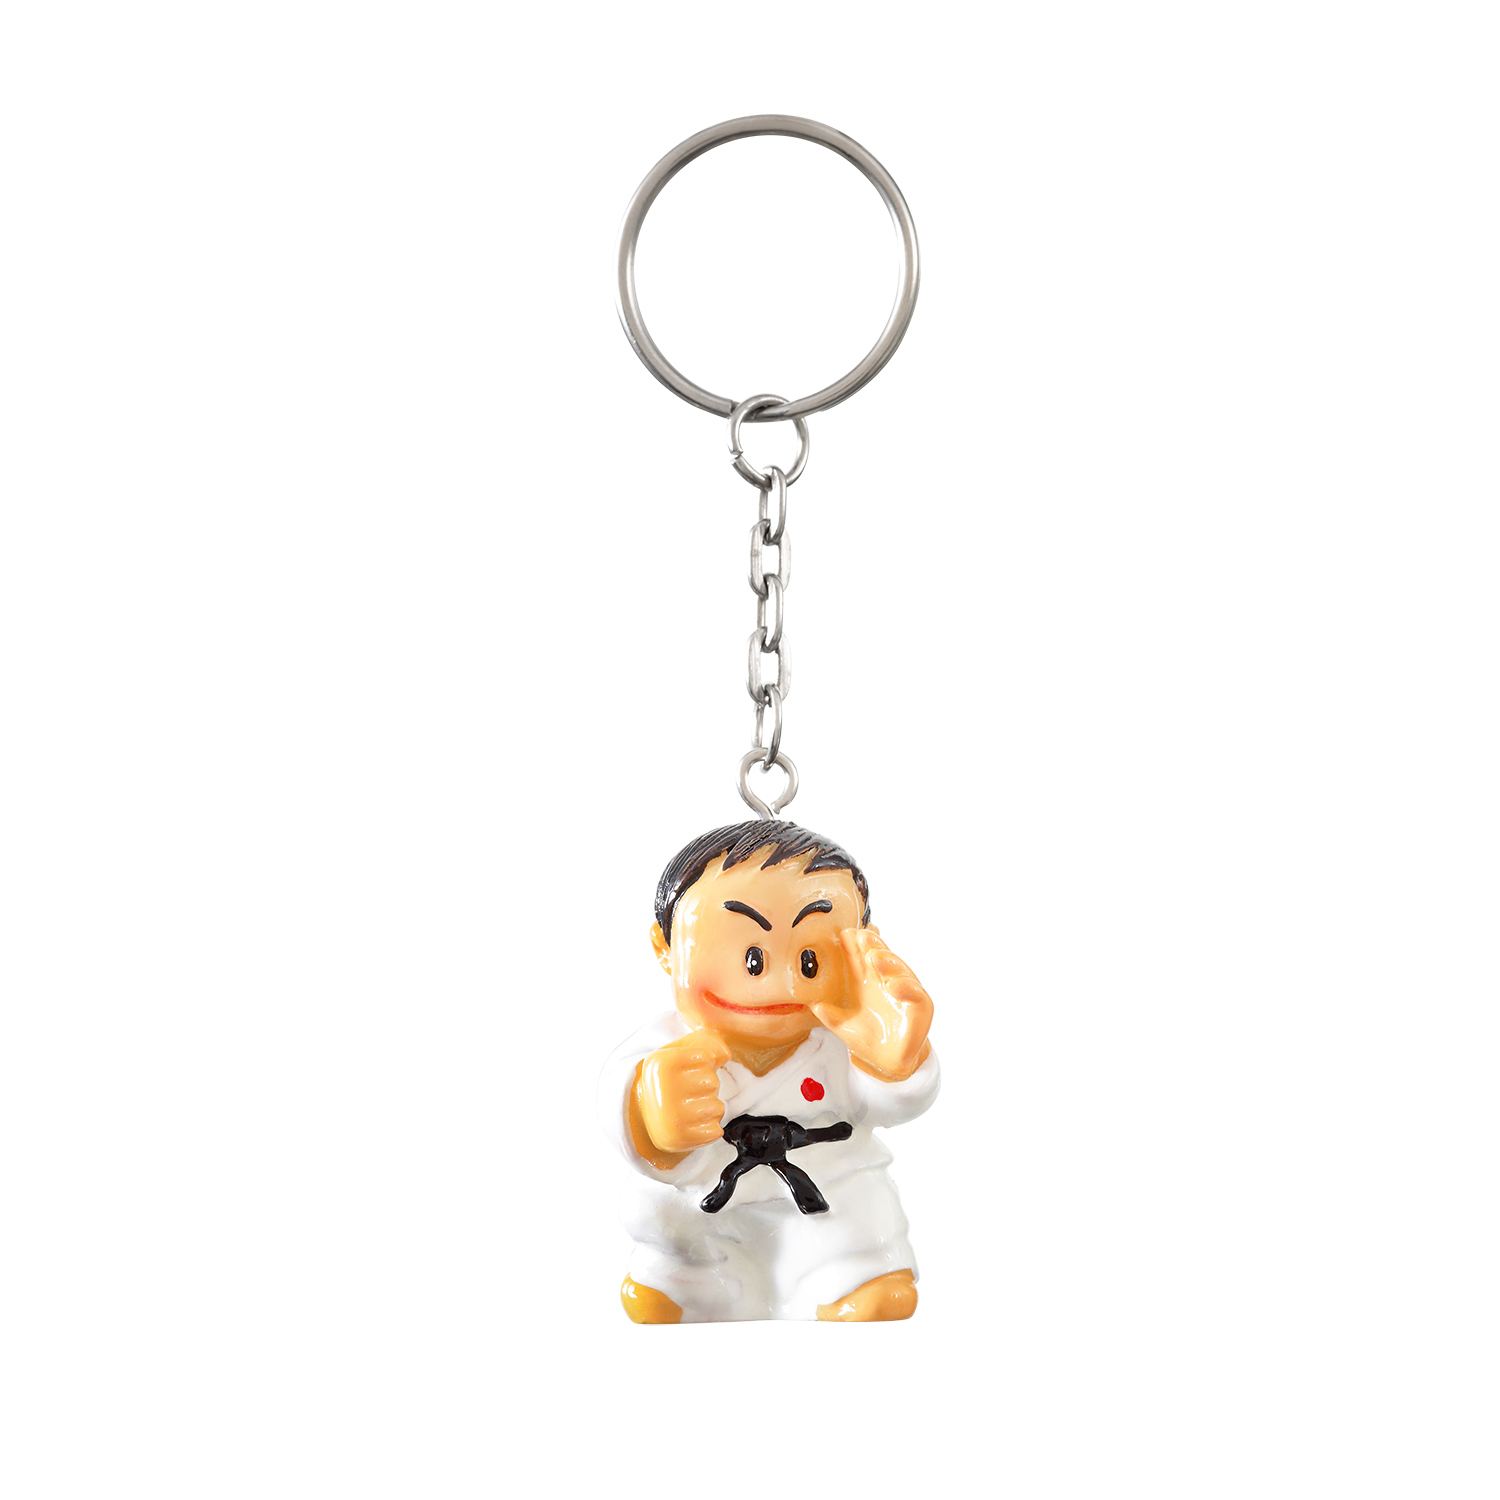 Karate Figurine Key Chain - FG67 - Click Image to Close